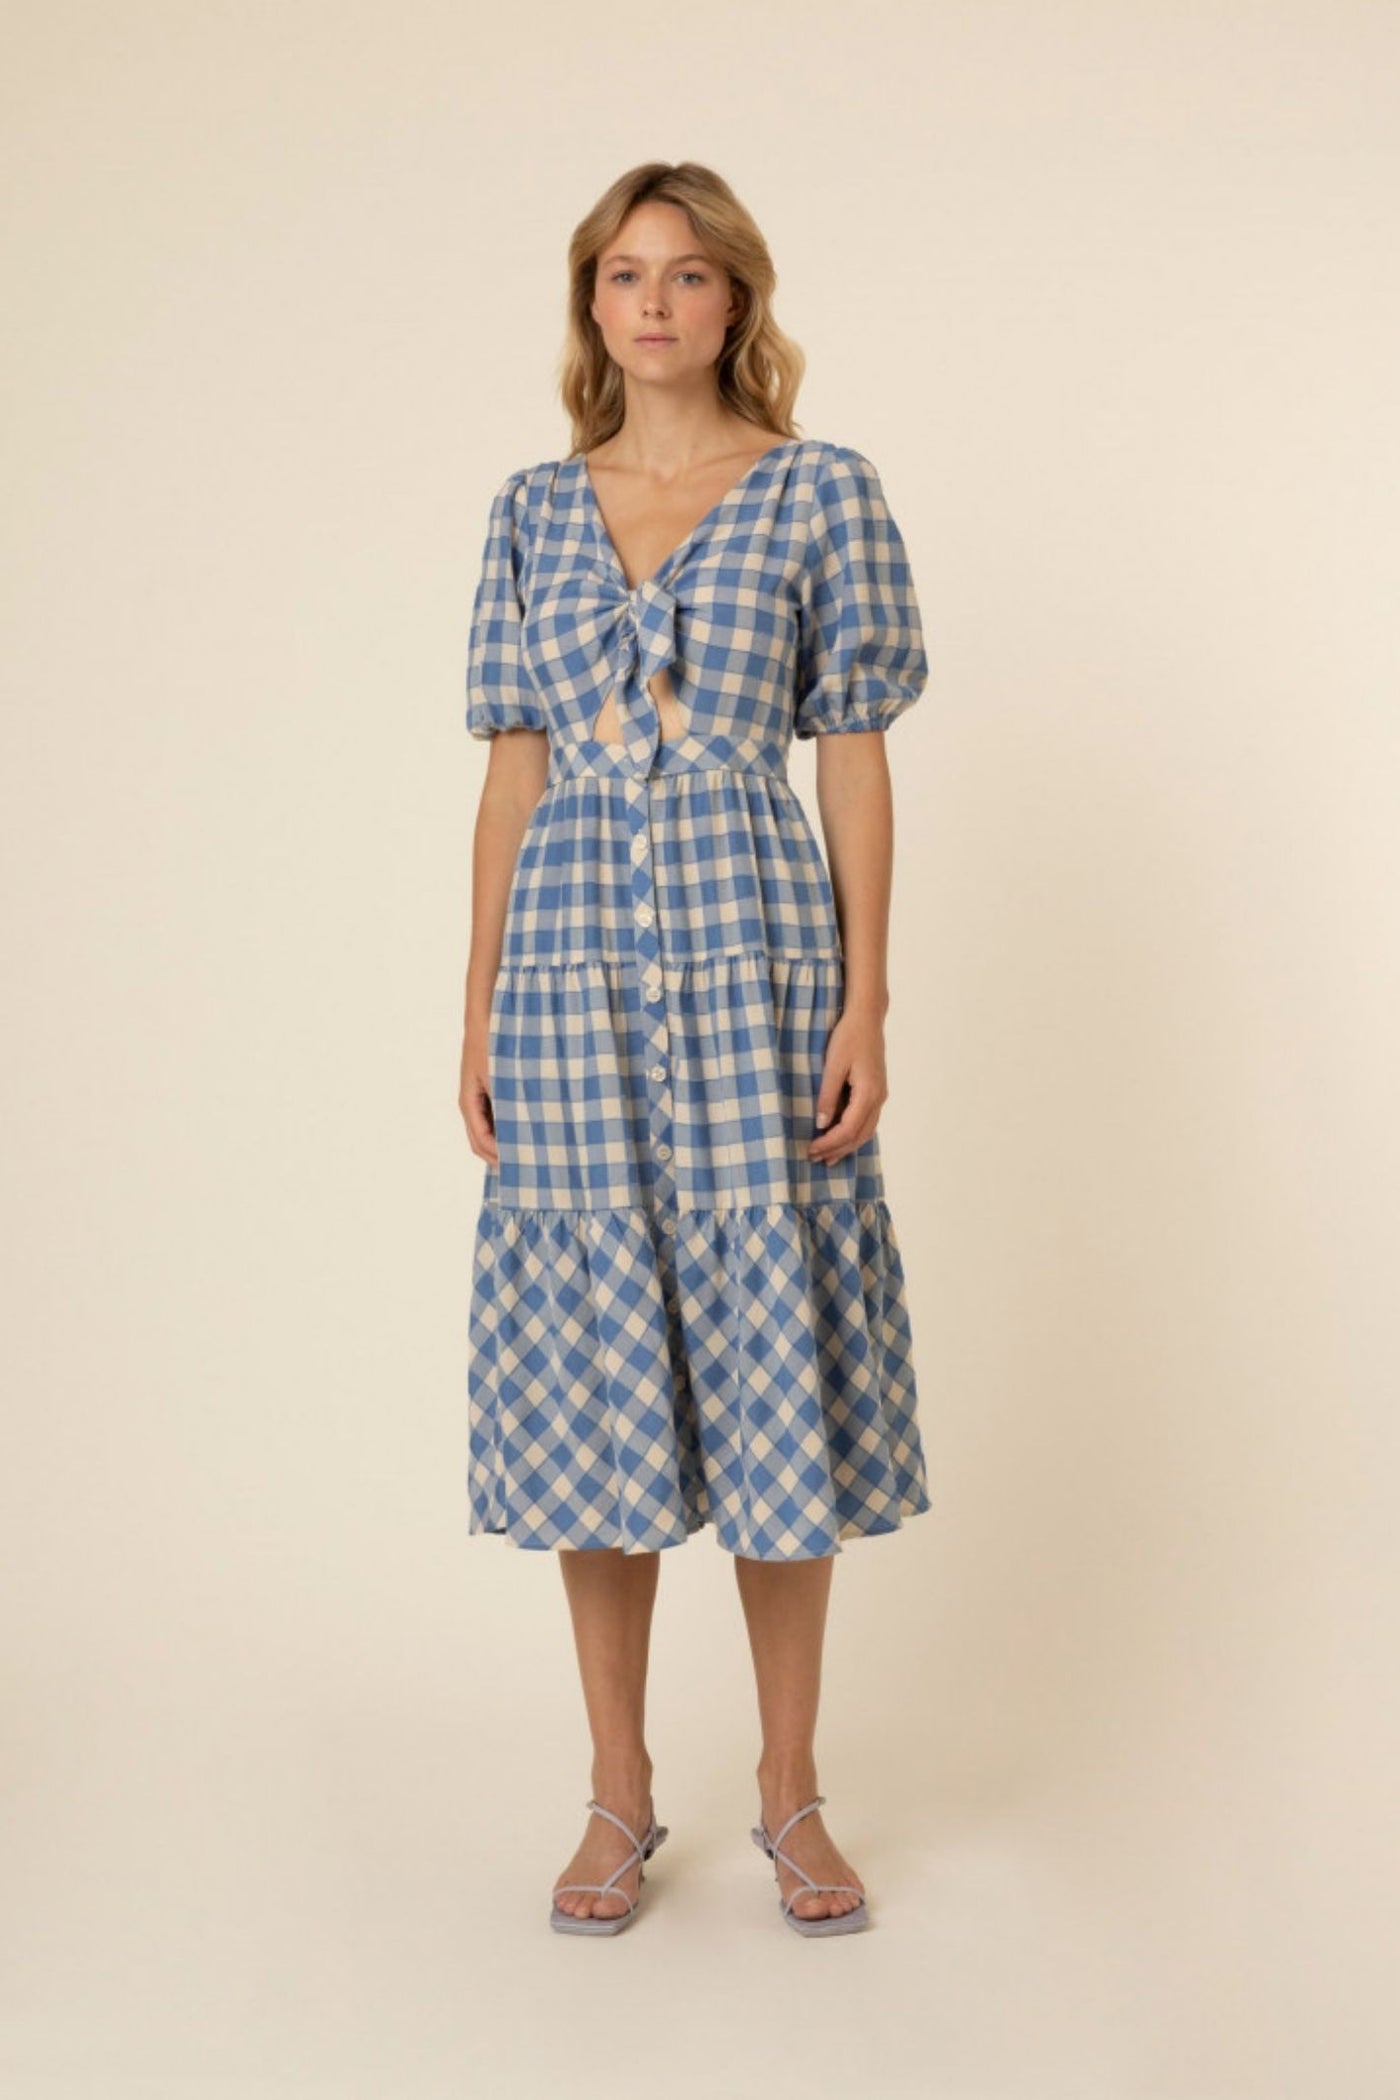 Frnch Victorie Bleu Jean Dress | Jezabel Boutique